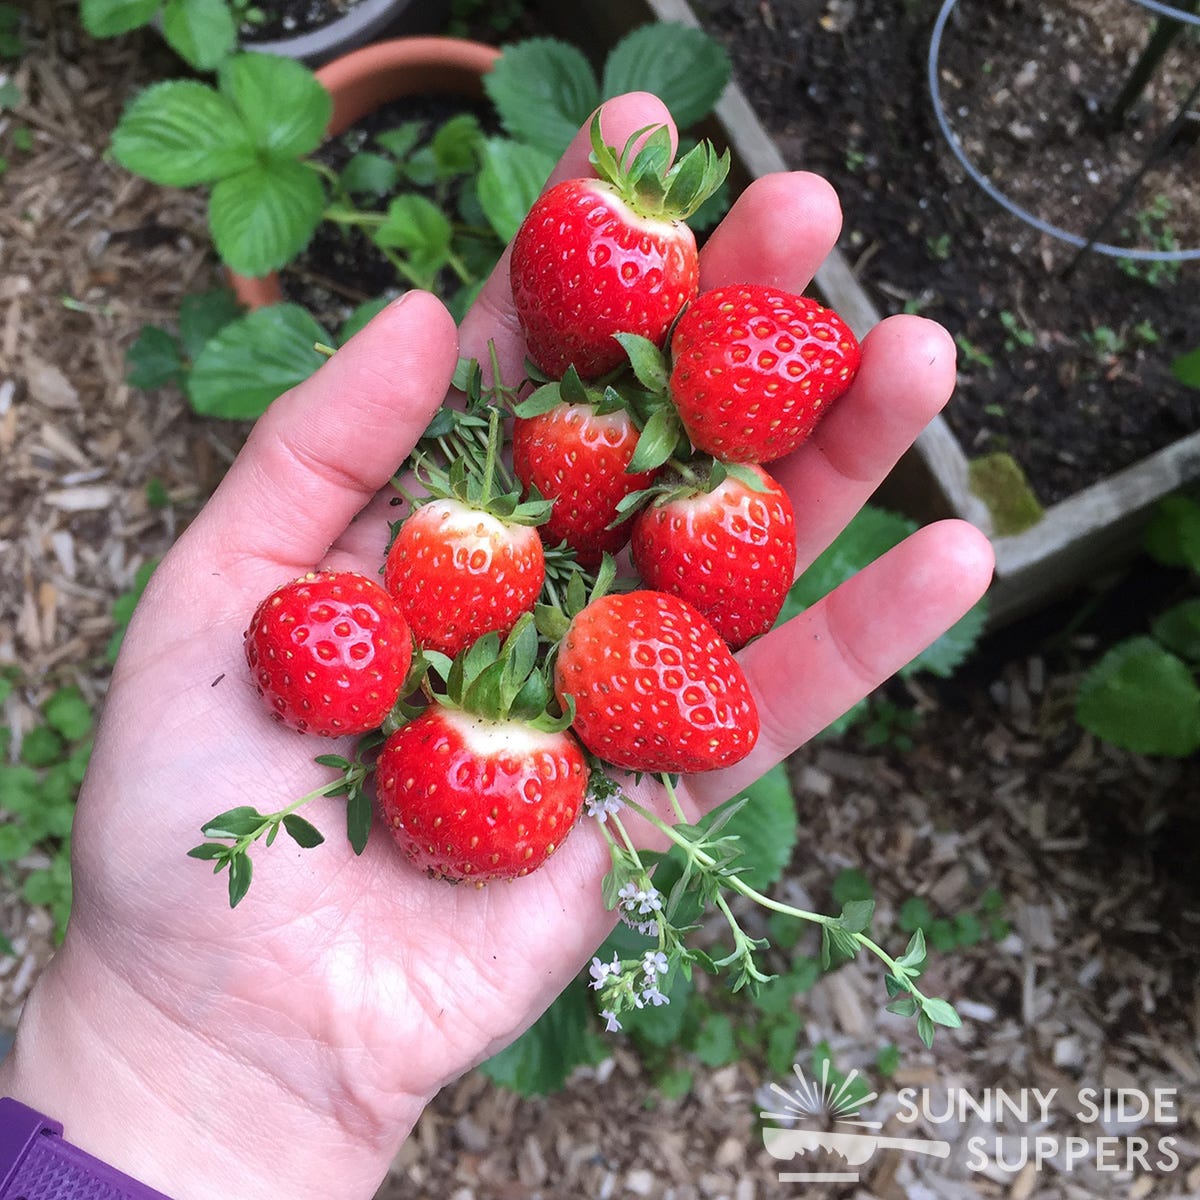 A hand holding fresh strawberries.